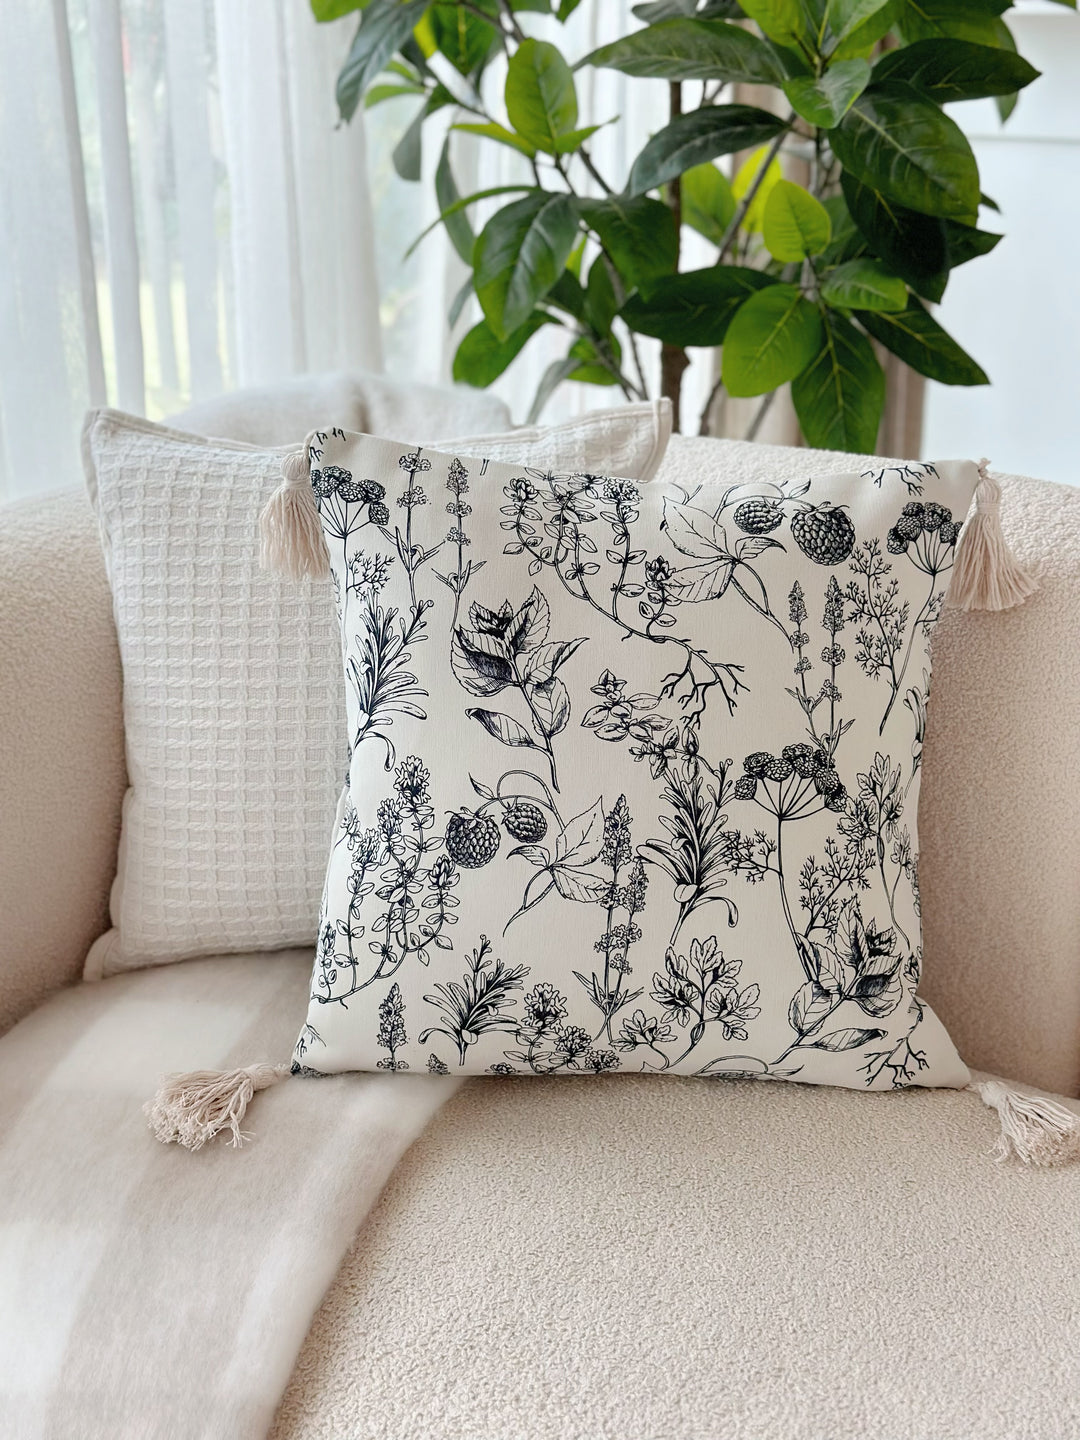 Botanical Sketch Cushion Cover